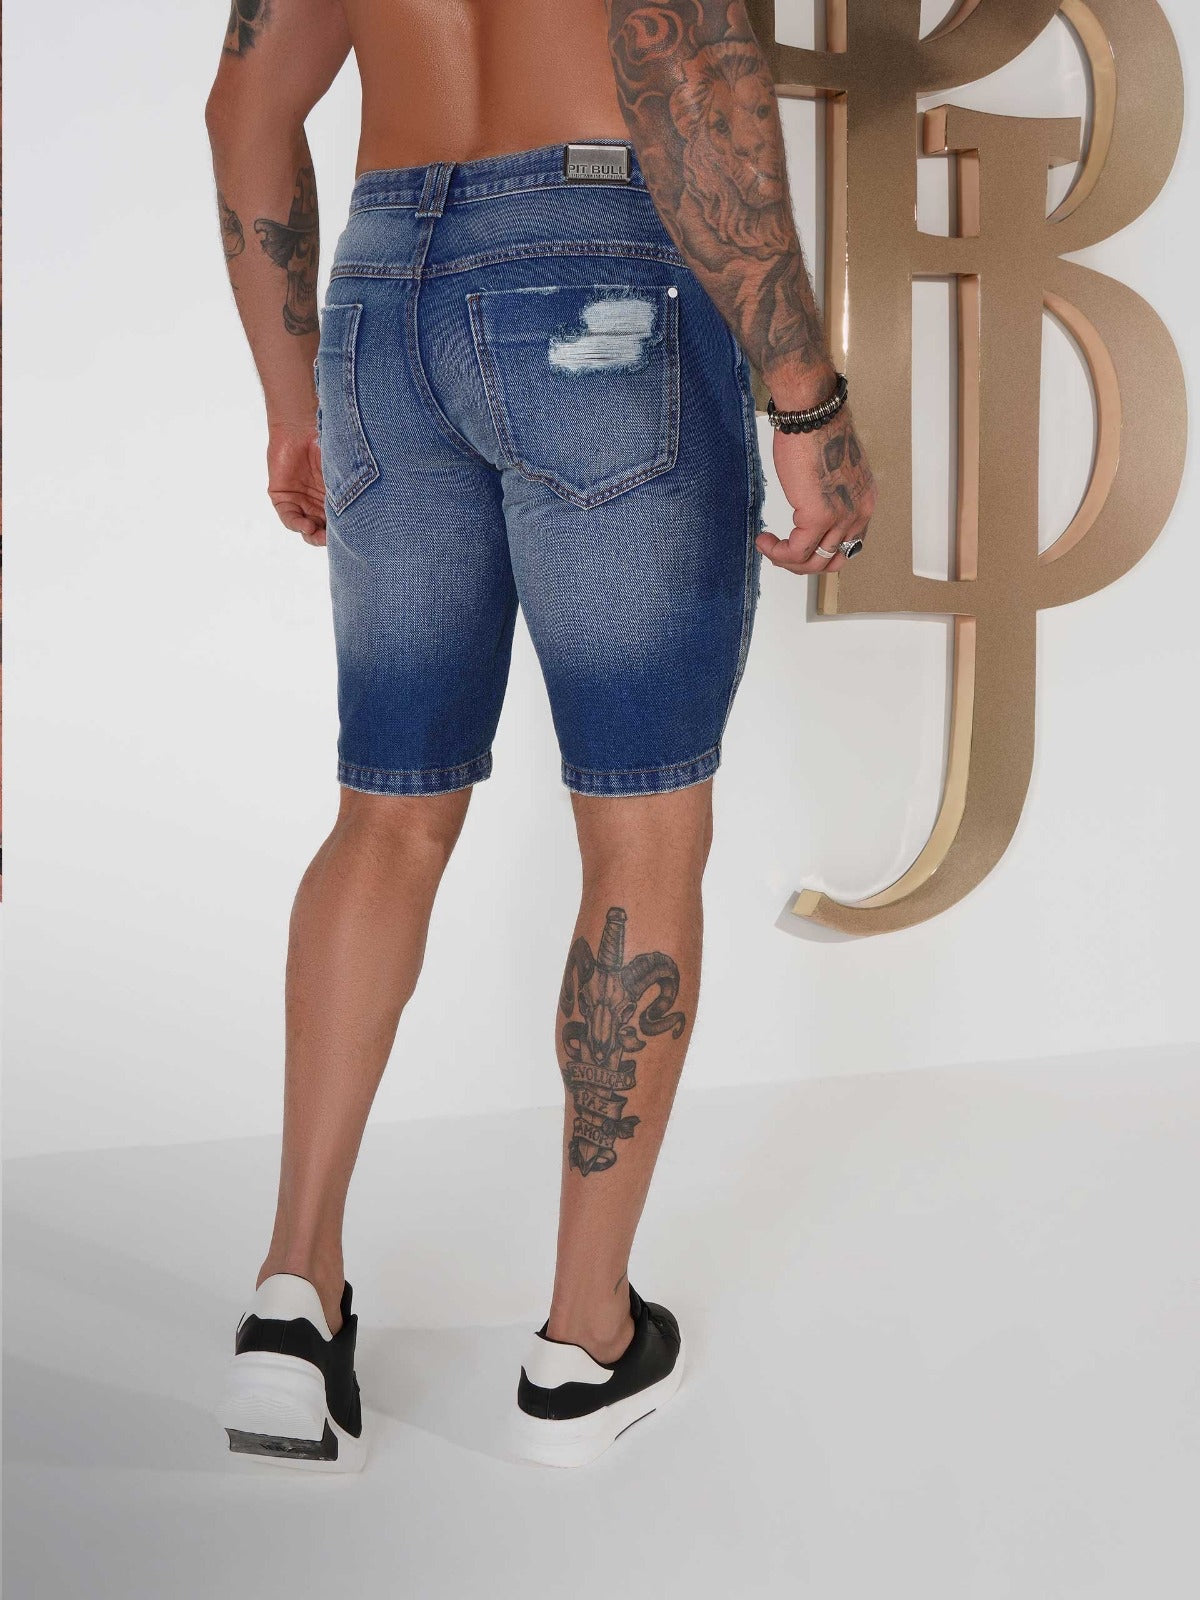 Pit Bull Jeans Men's Jeans Shorts 64927